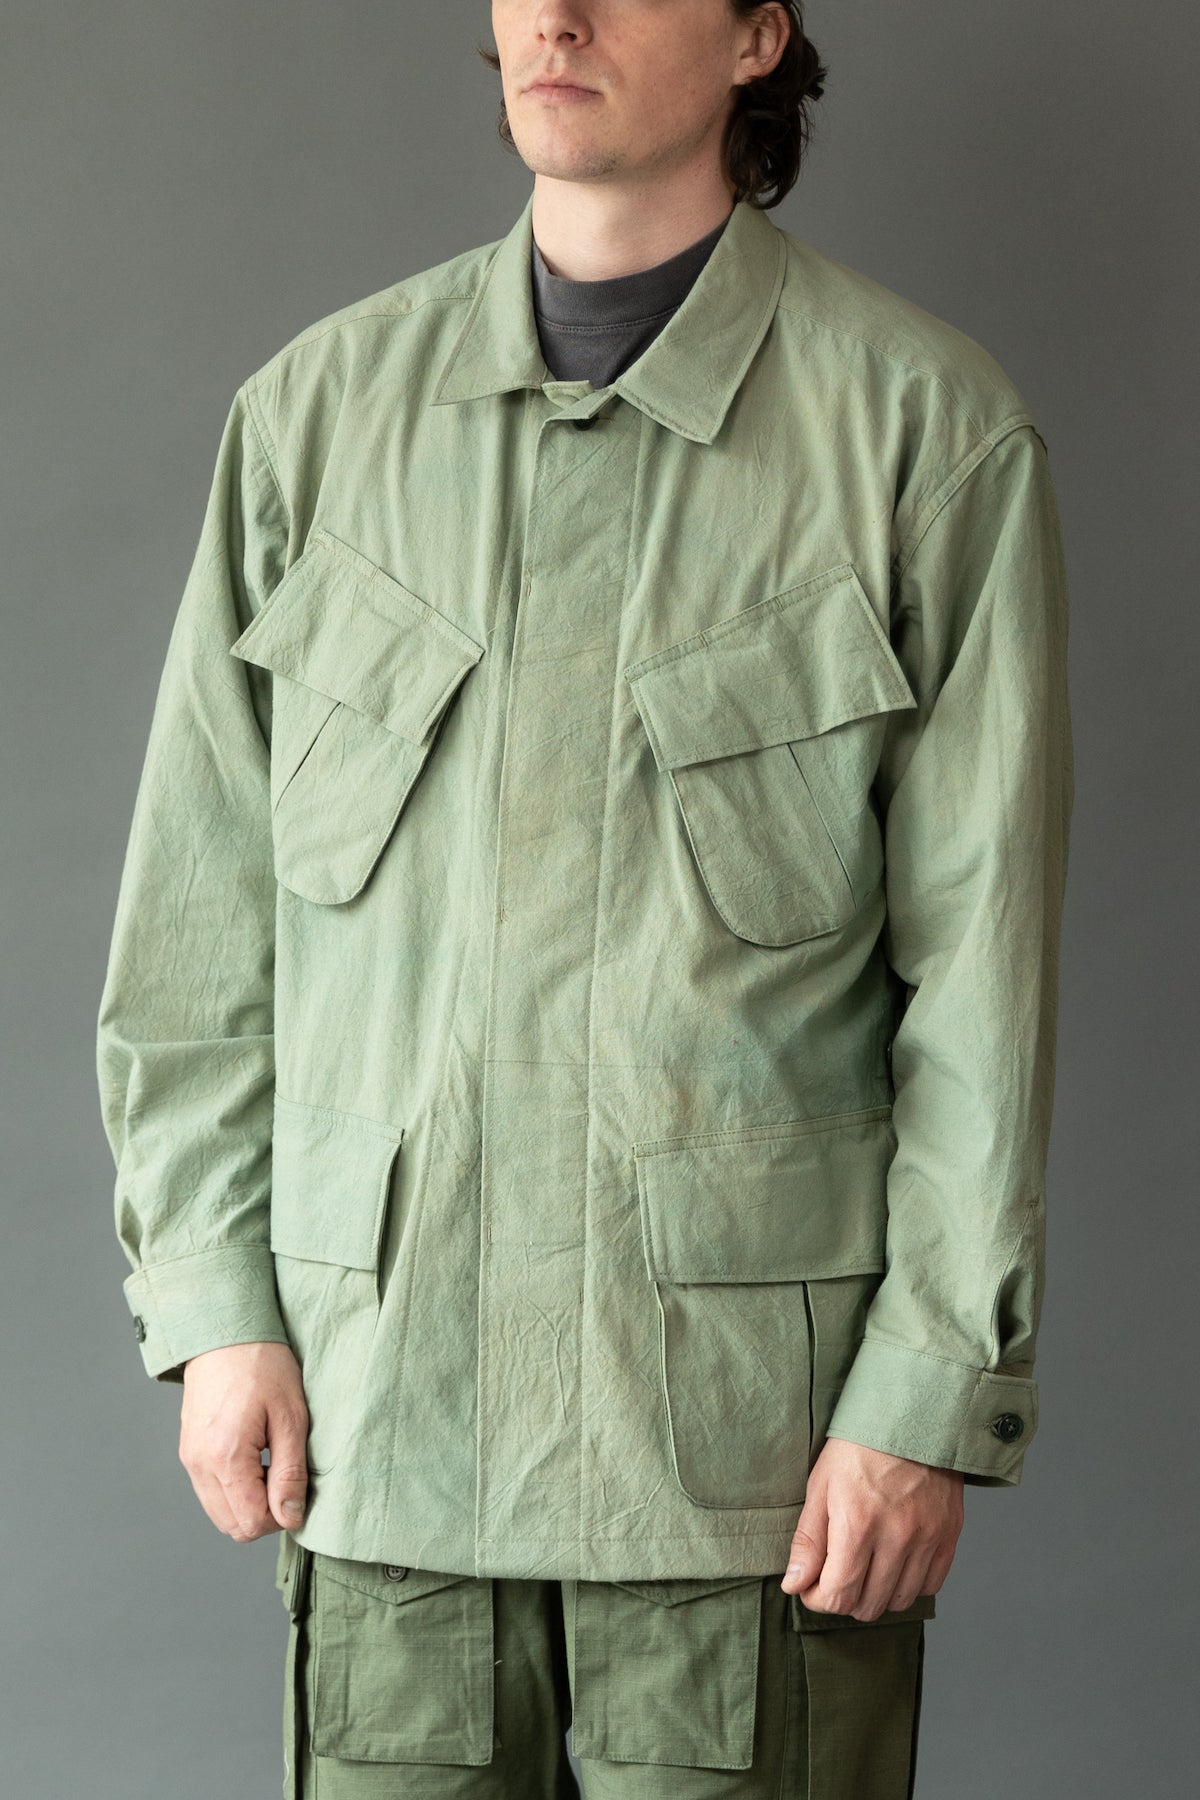 Jungle Fatigue Jacket - Olive Cotton Sheeting